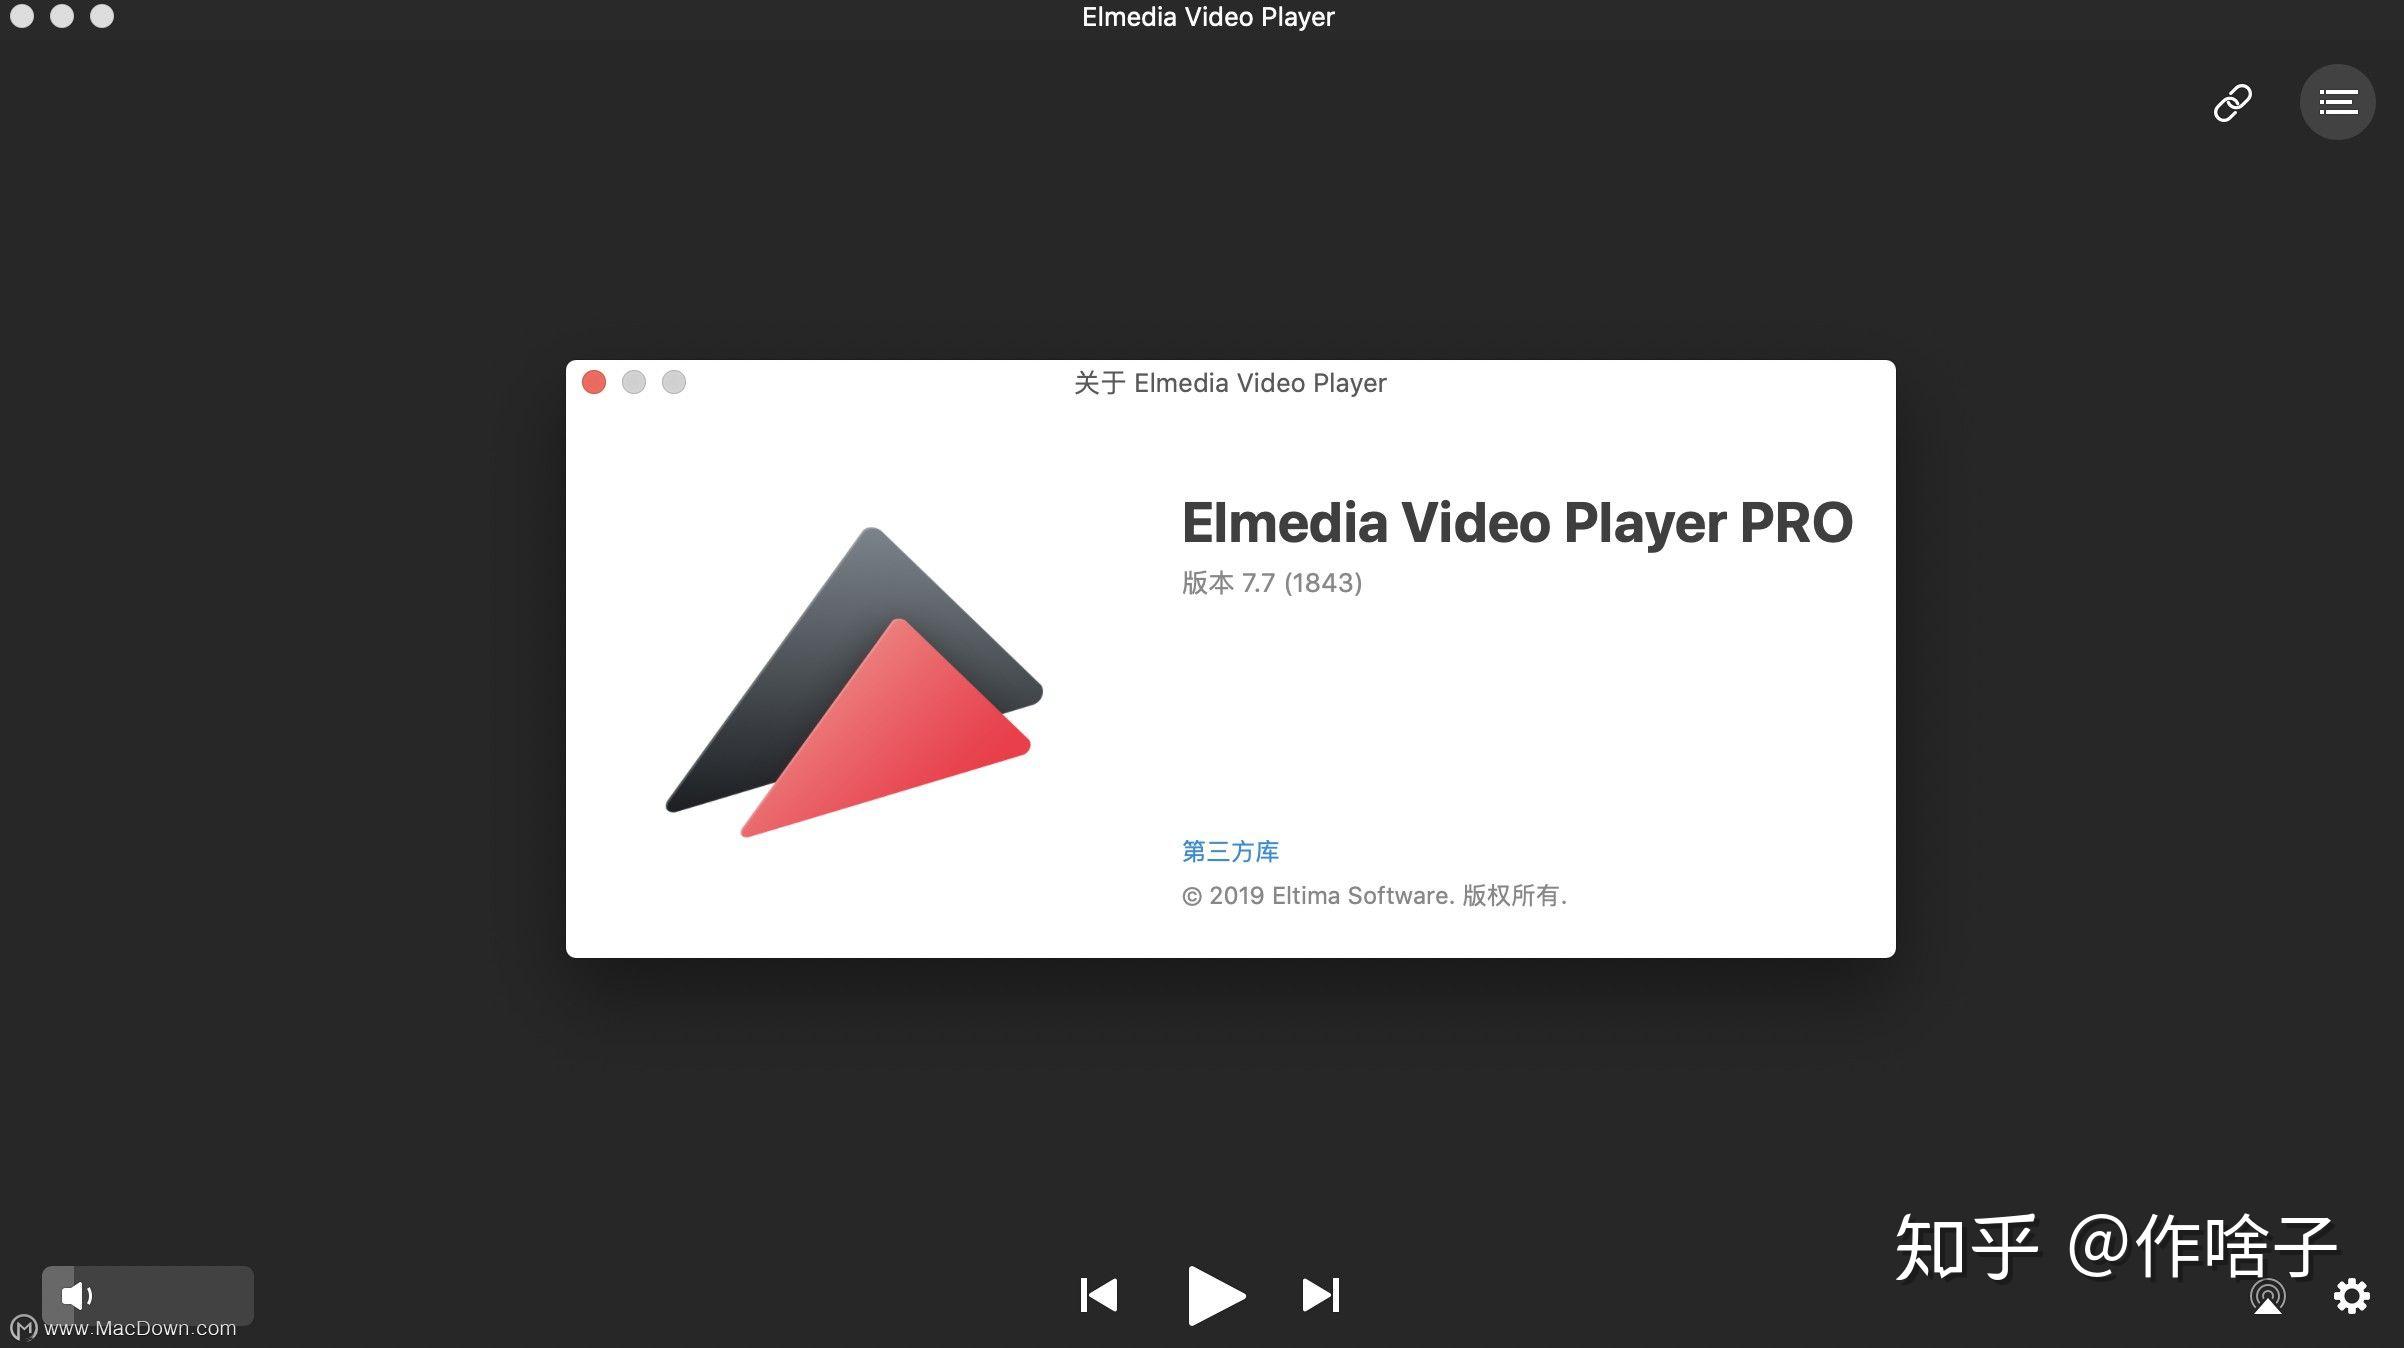 Elmedia Video Player Pro download the last version for apple